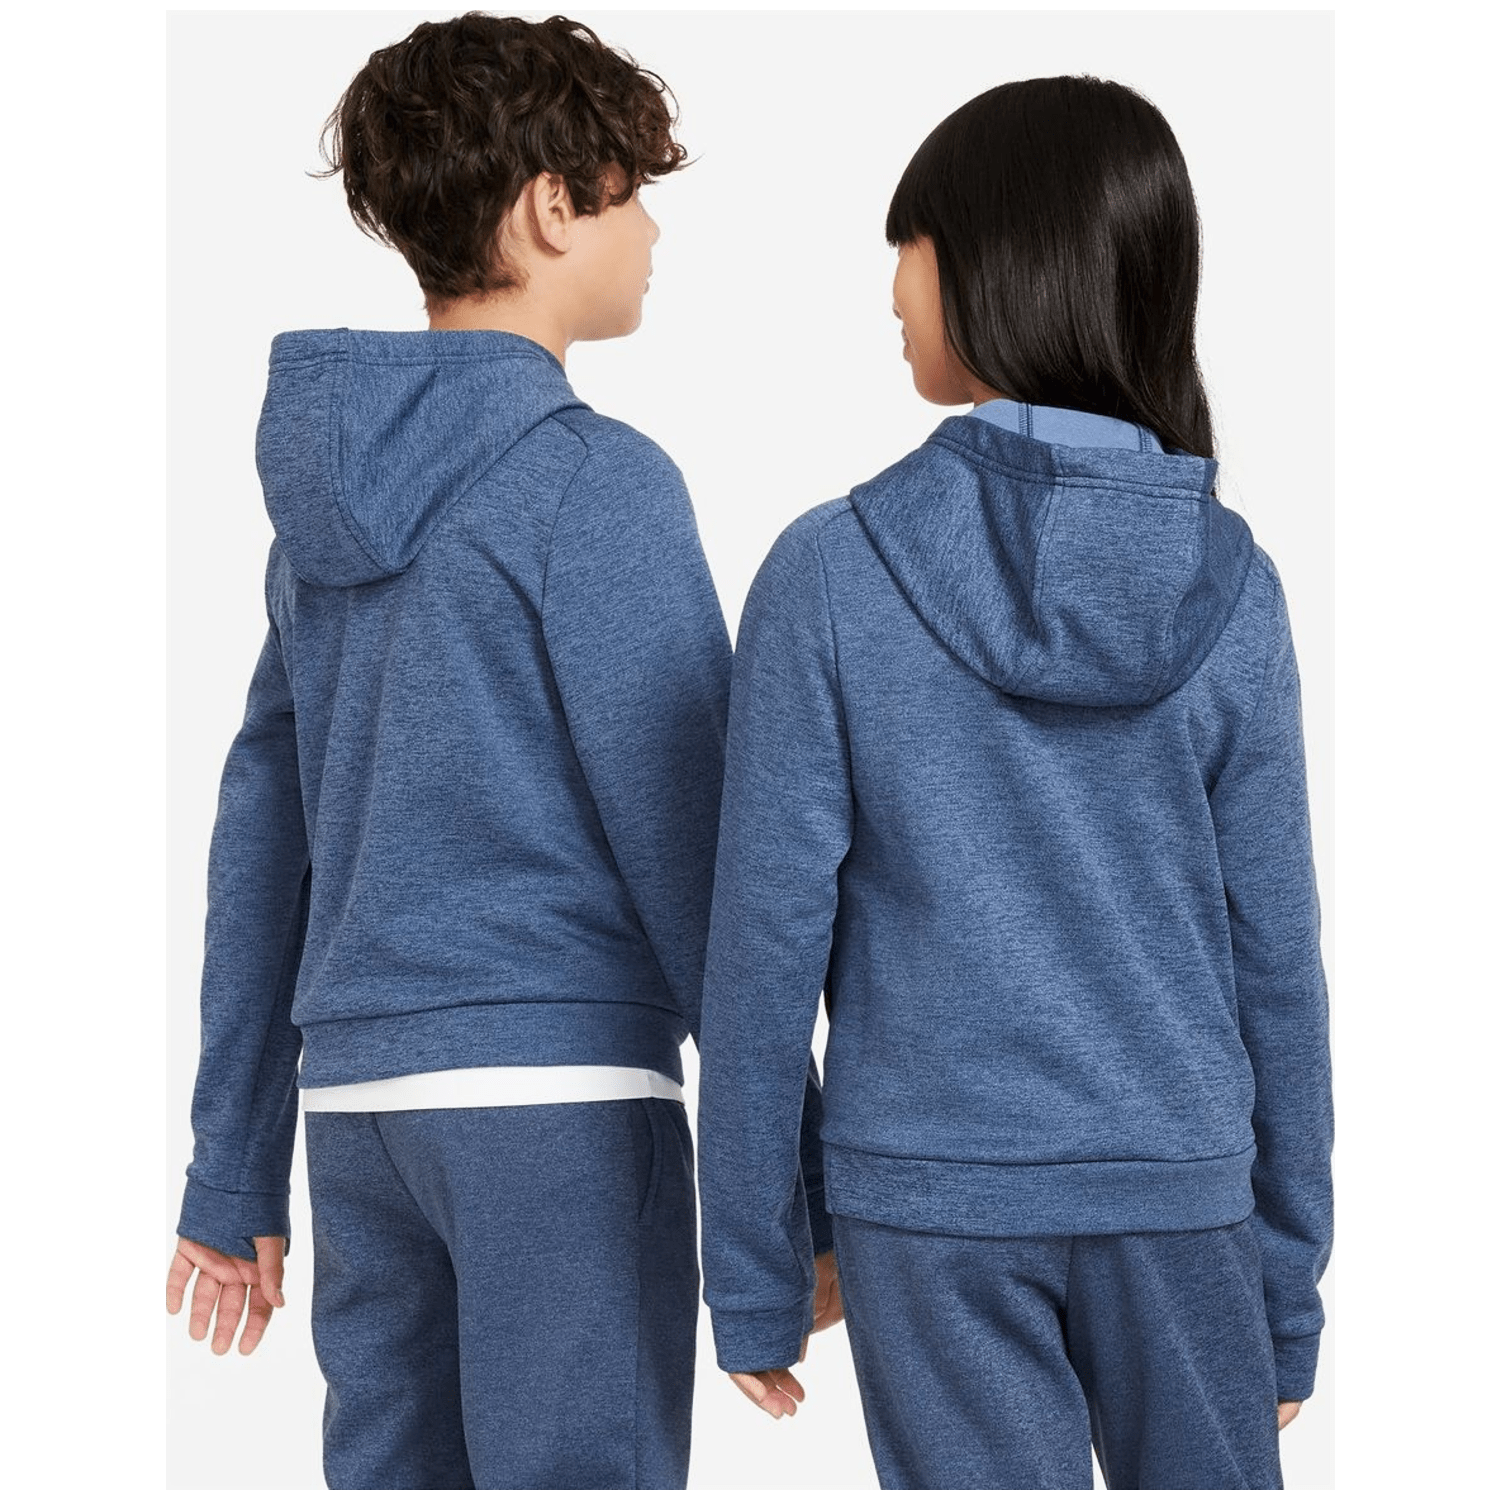 Nike Therma Multi+ Training Kinder Kapuzensweater